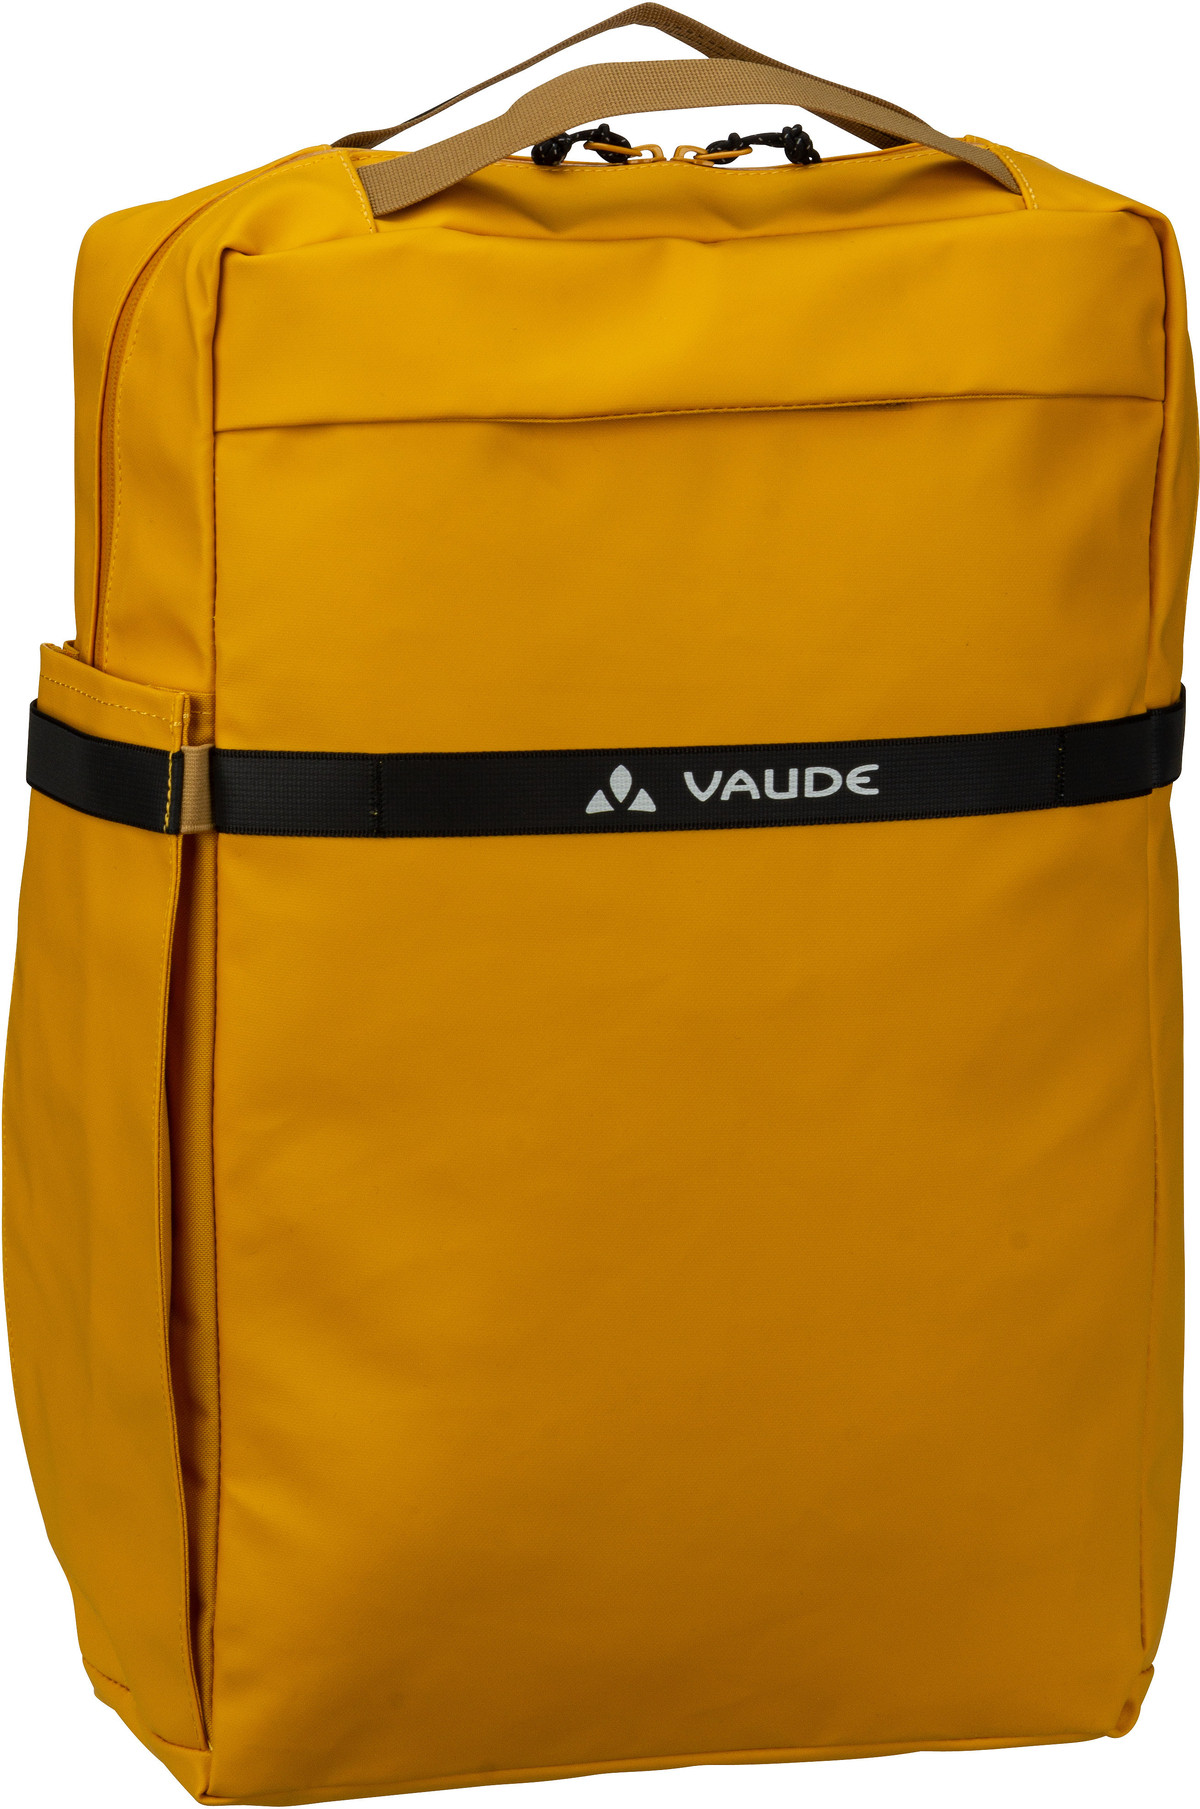 Vaude Mineo Transformer Backpack 20 - Burnt Yellow